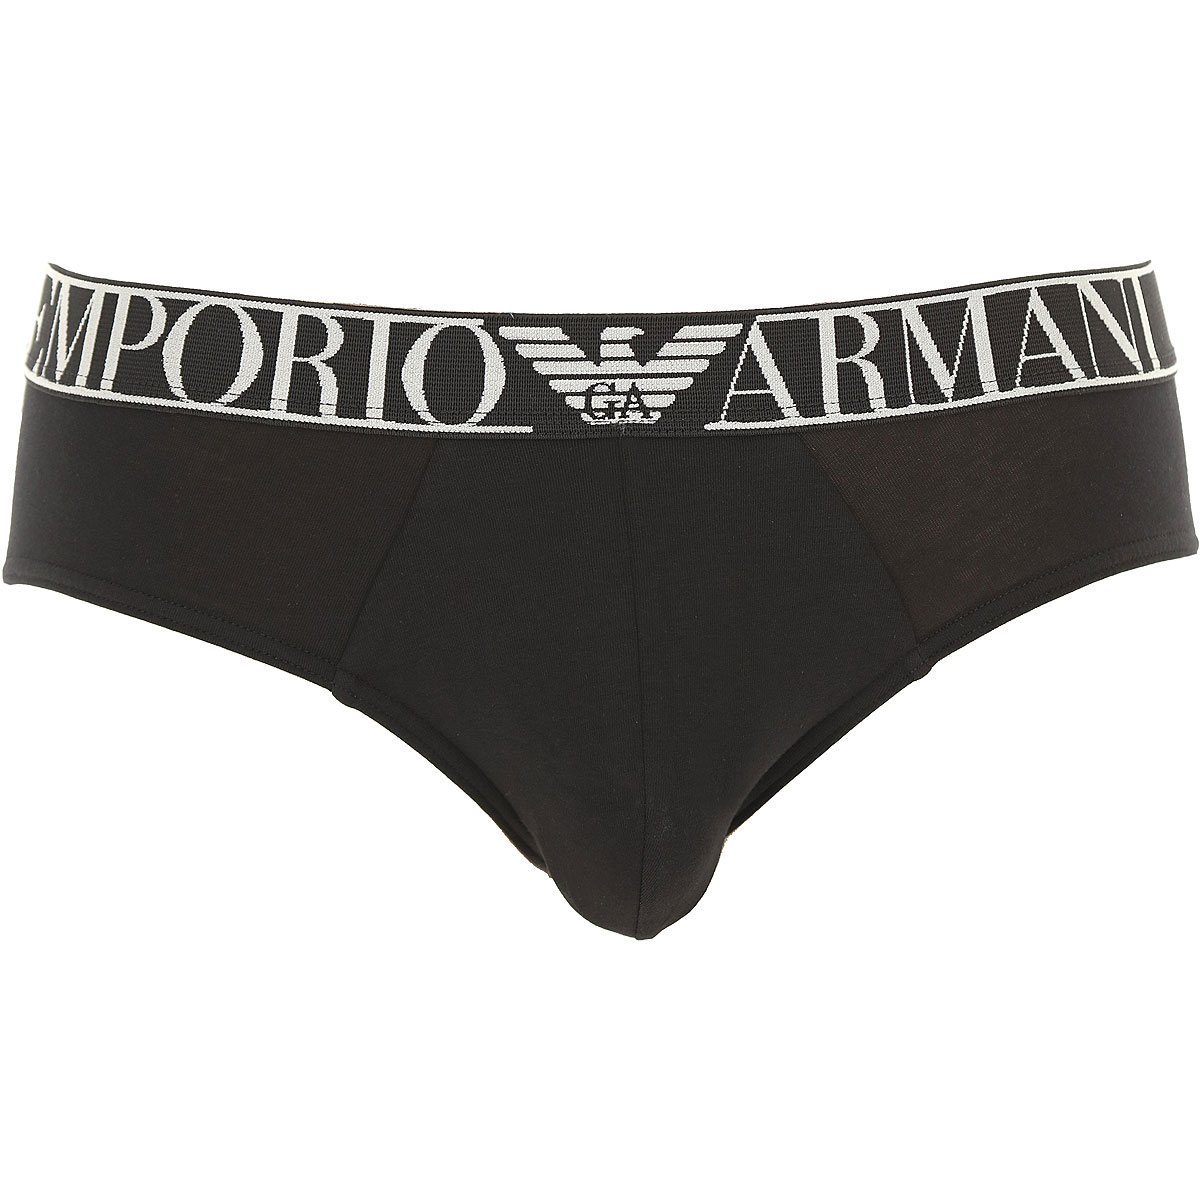 Mens Underwear Emporio Armani, Style code: 111733-0a720-23820